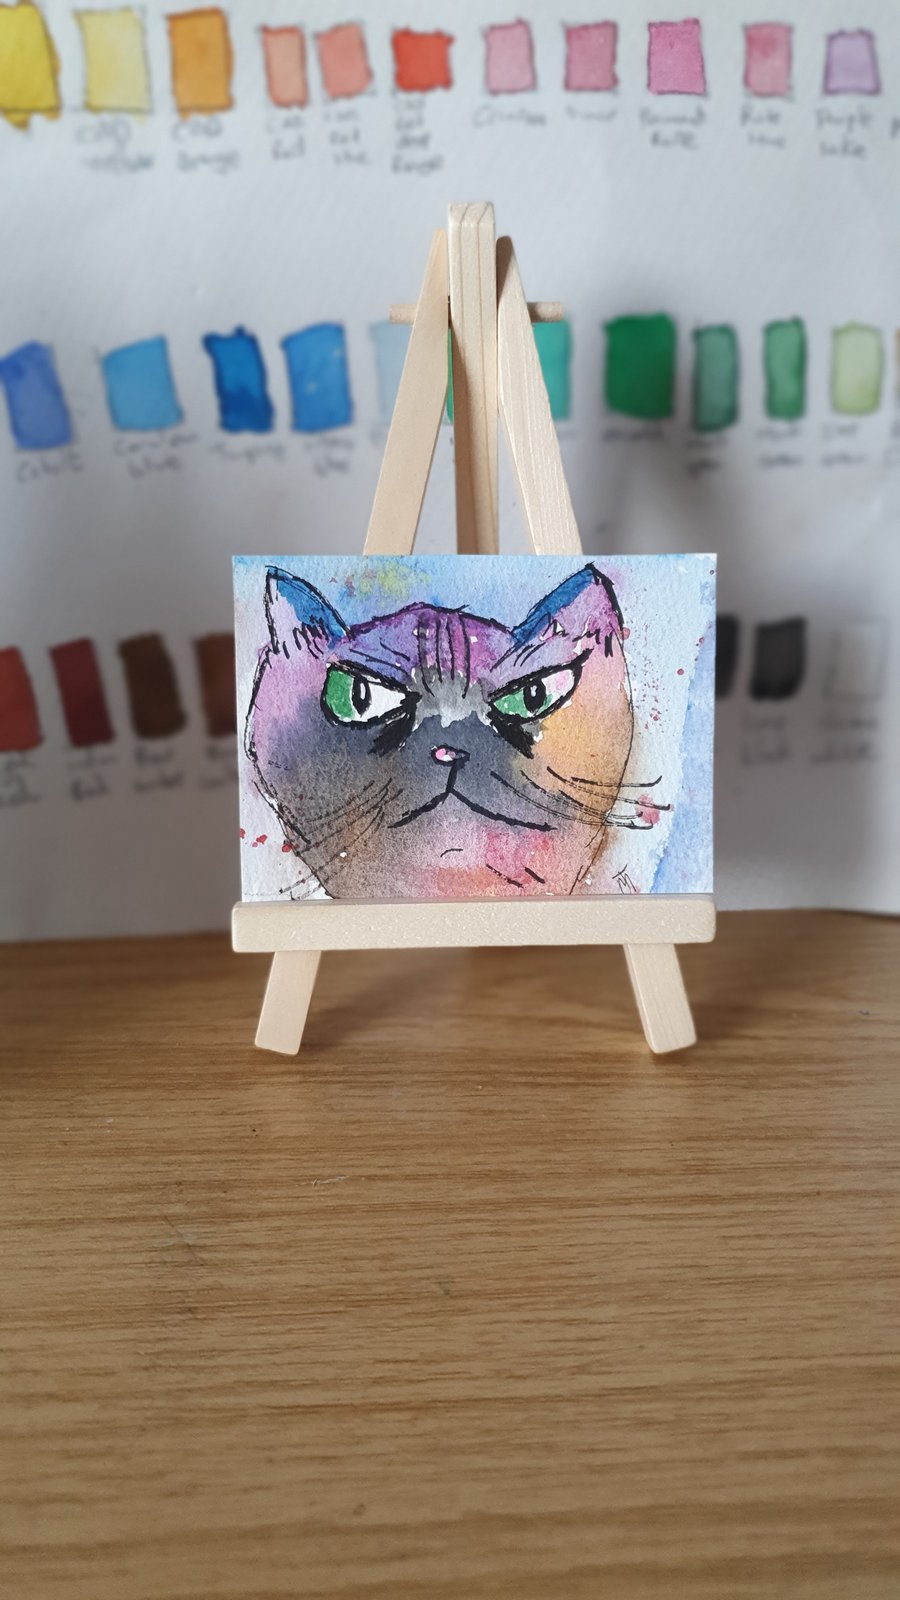 Cat ATC card miniature watercolour artwork approx 3.5" x 2.5 inches grumpy cat